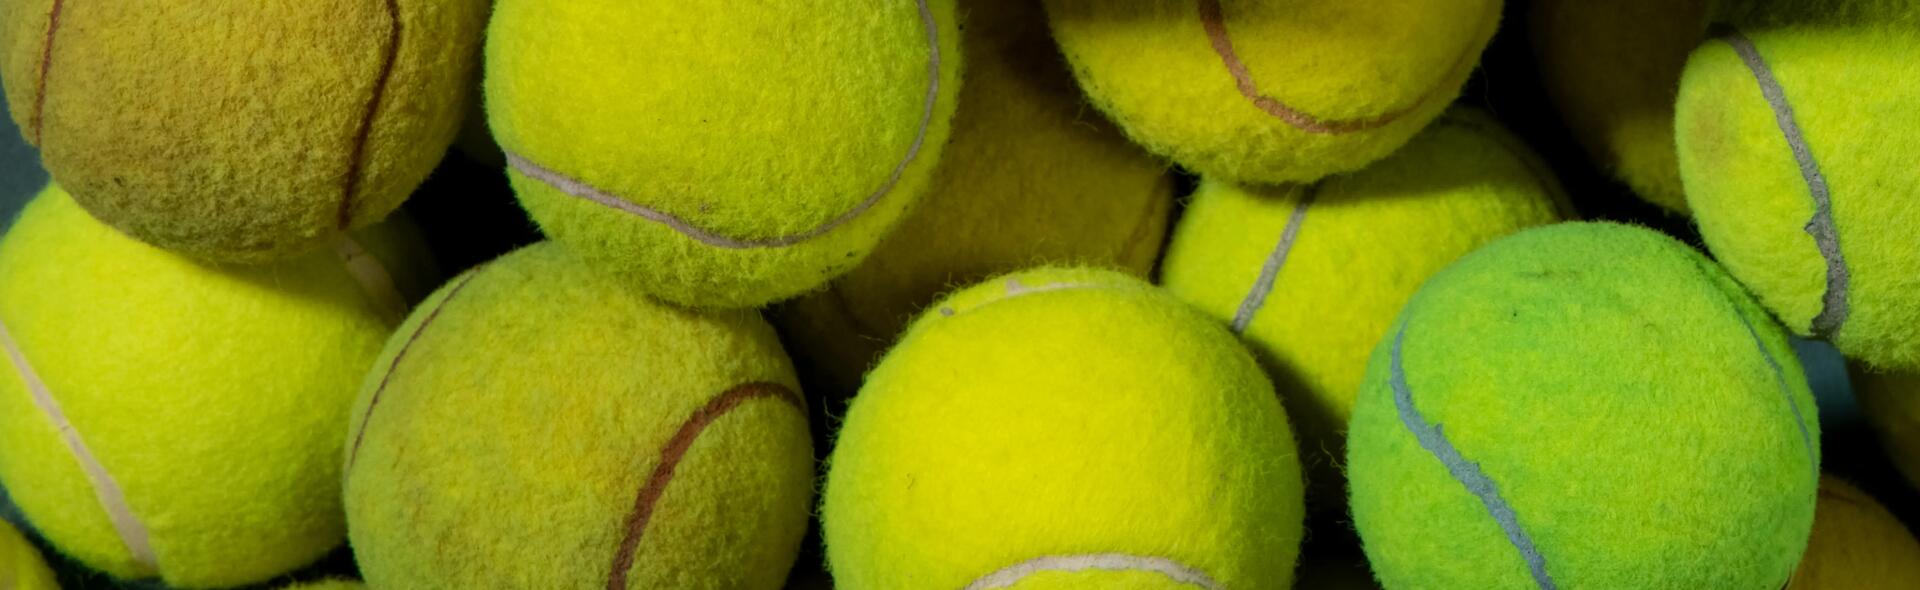 A pile of tennis balls